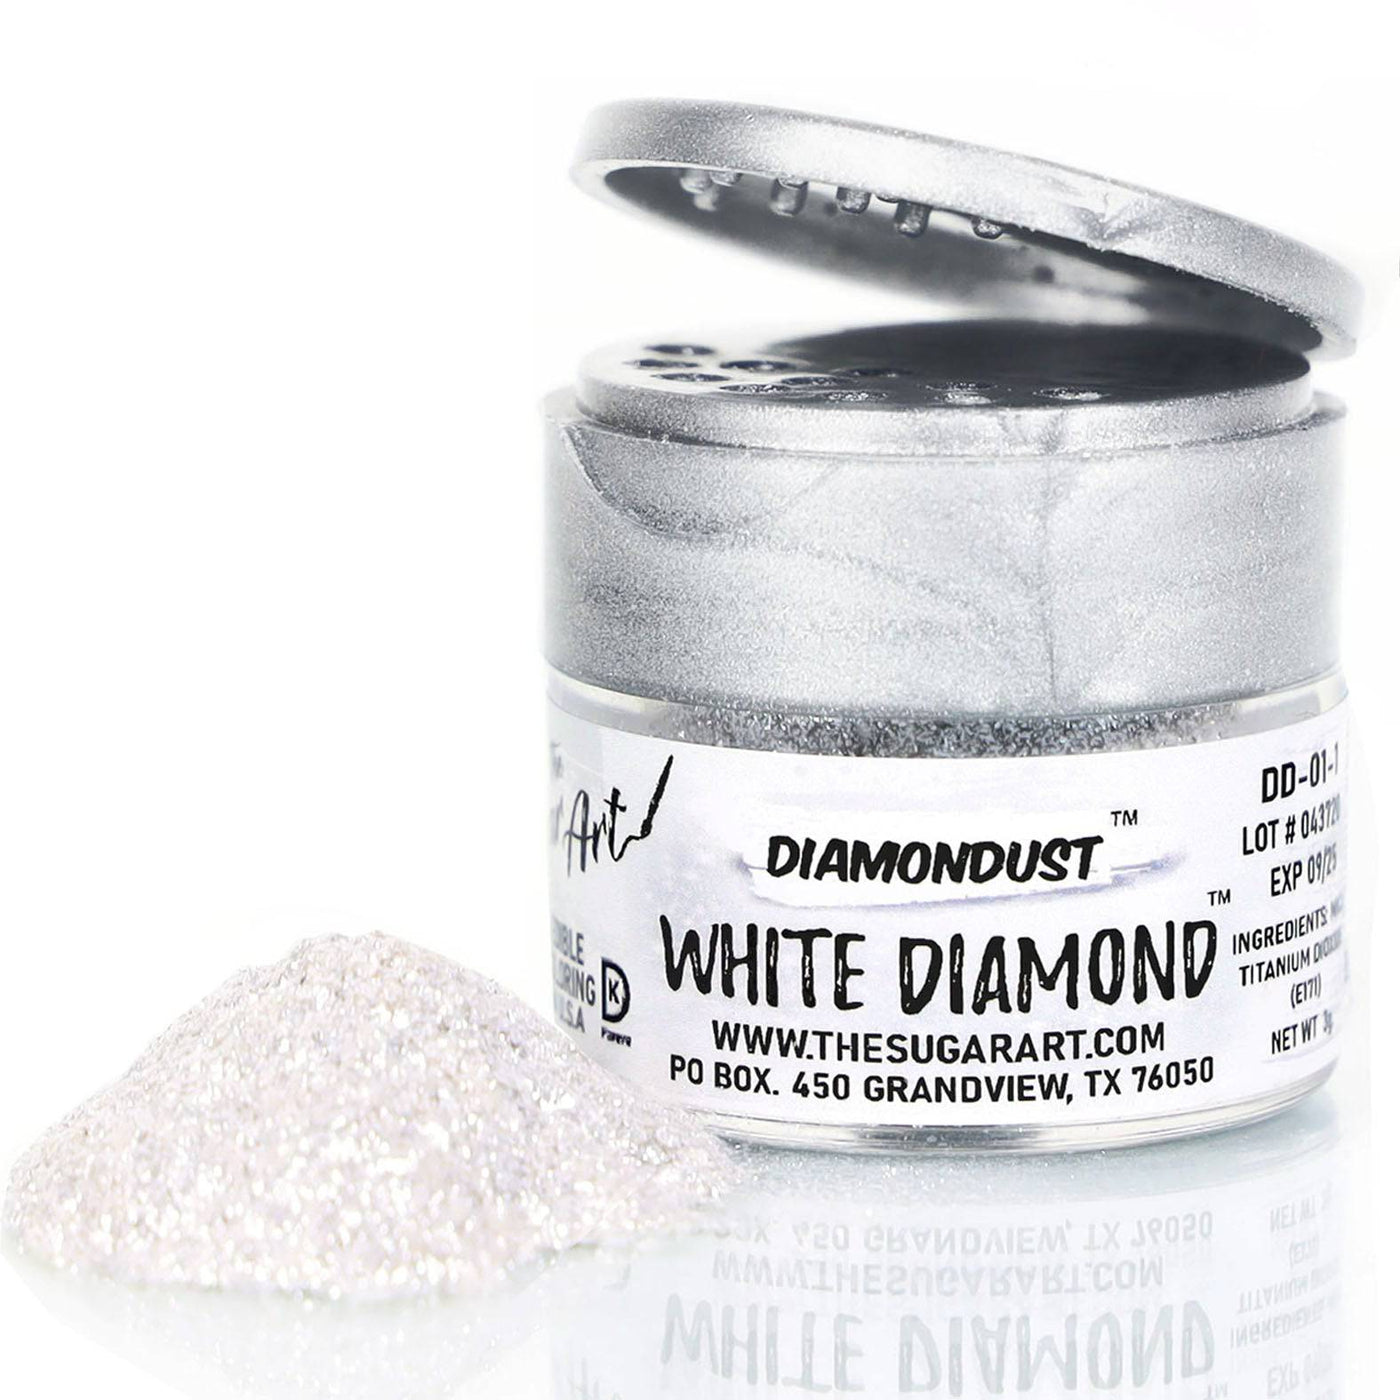 White Diamond Edible Glitter